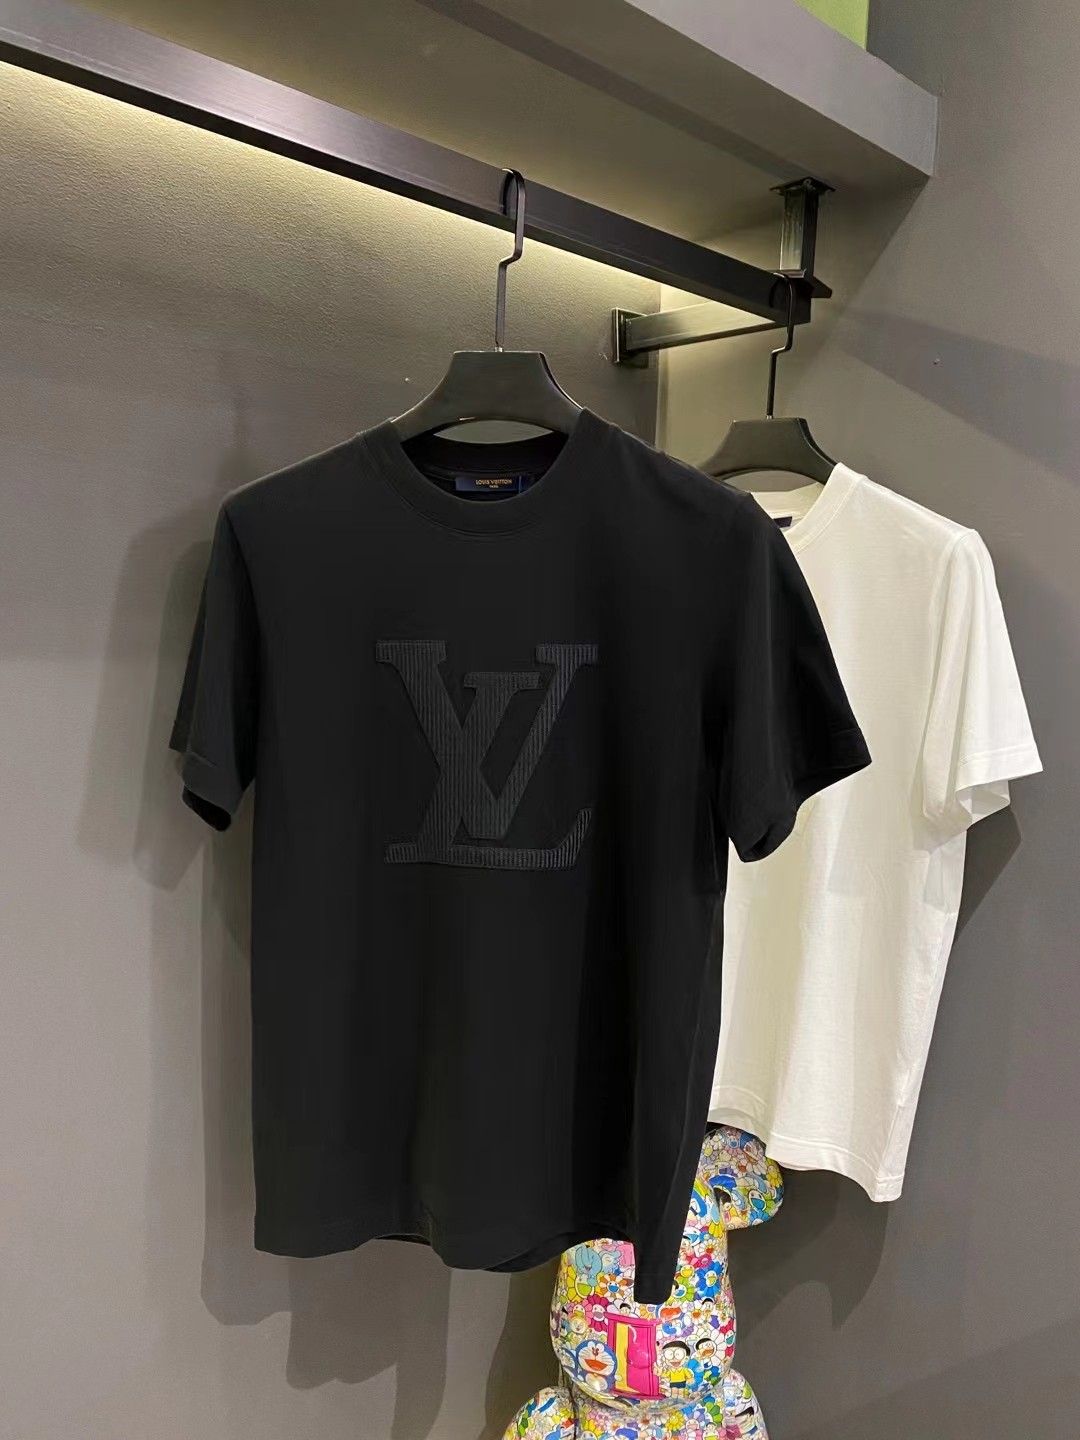 Louis Vuitton Clothing T-Shirt Same as Original
 Black White Spring/Summer Collection Fashion Short Sleeve